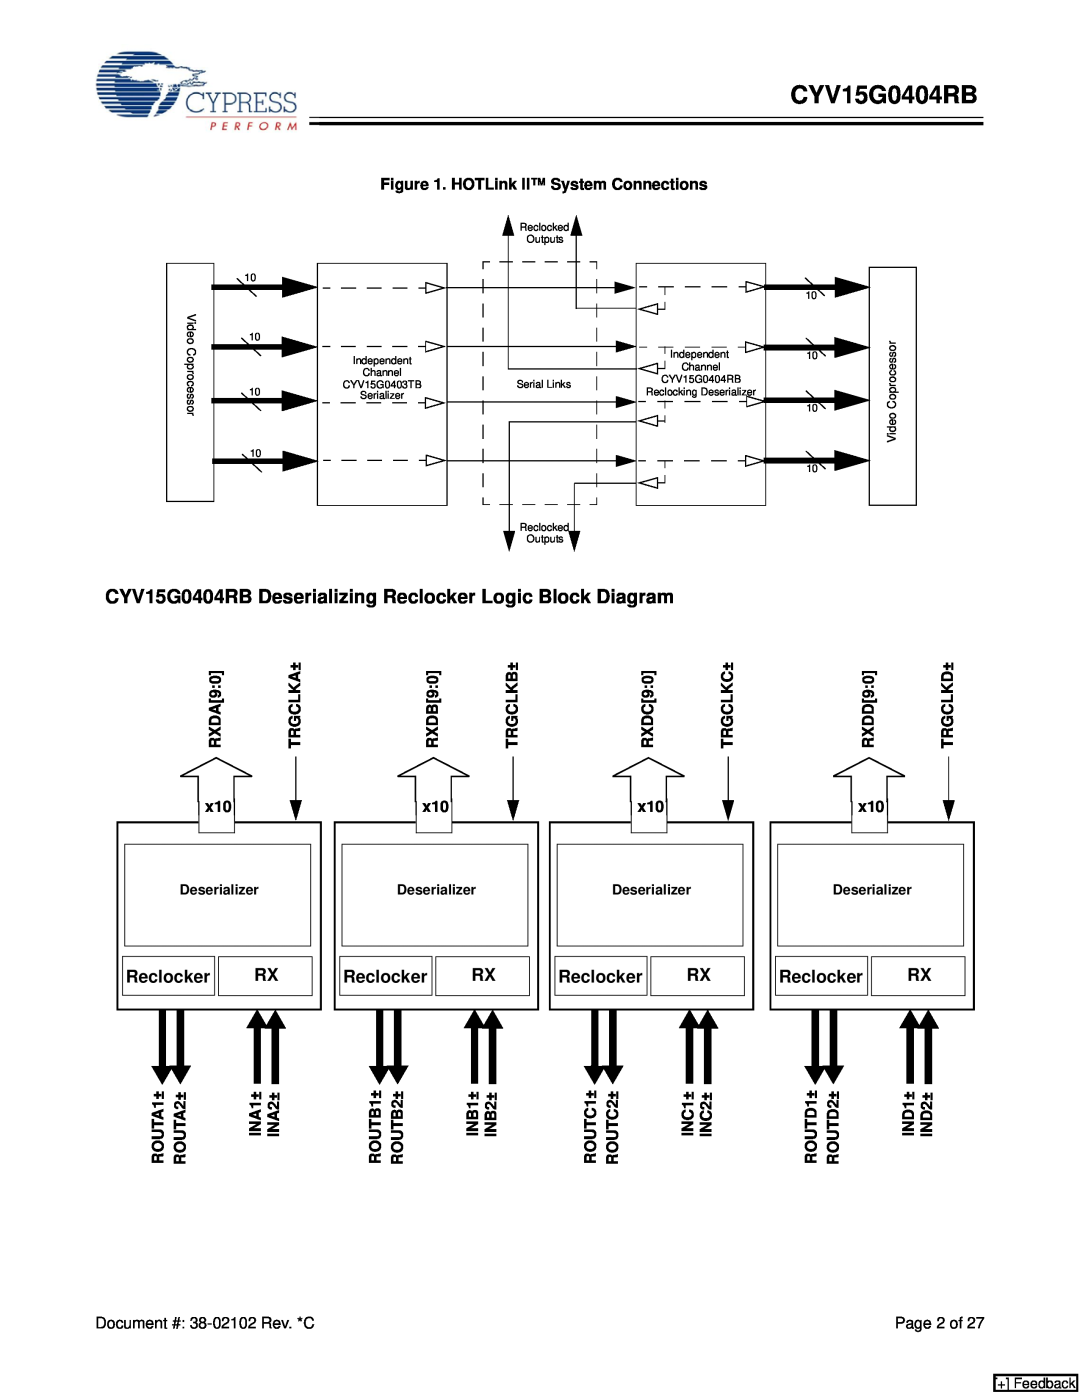 Cypress manual CYV15G0404RB Deserializing Reclocker Logic Block Diagram, Reclocker RX 